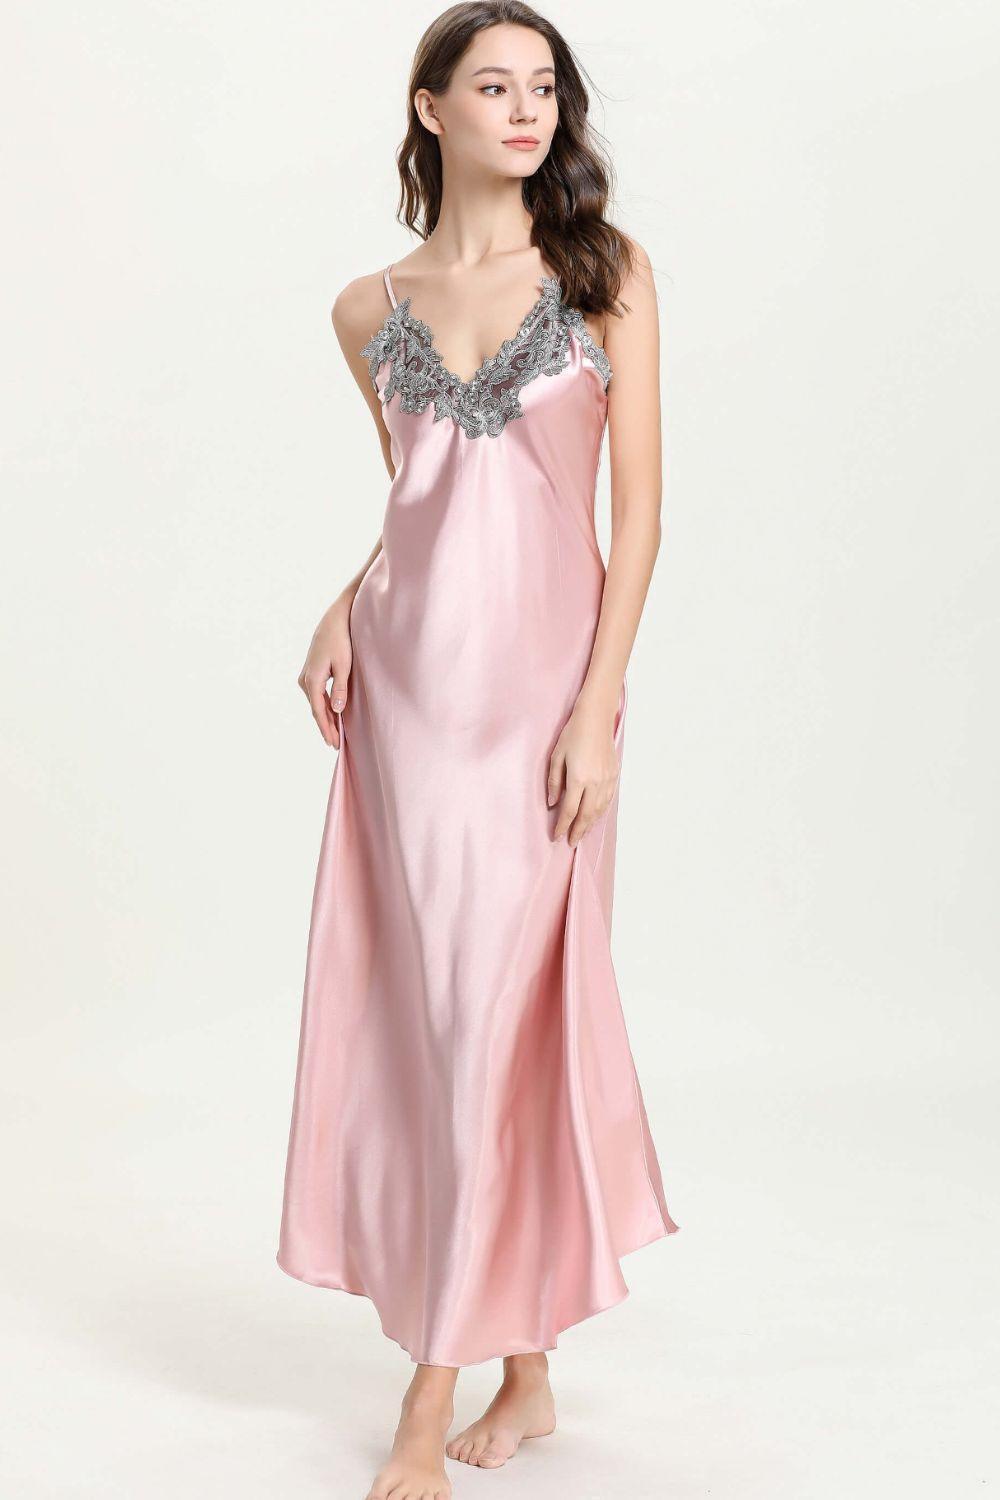 Lace Detail Neckline Satin Night Dress - MXSTUDIO.COM